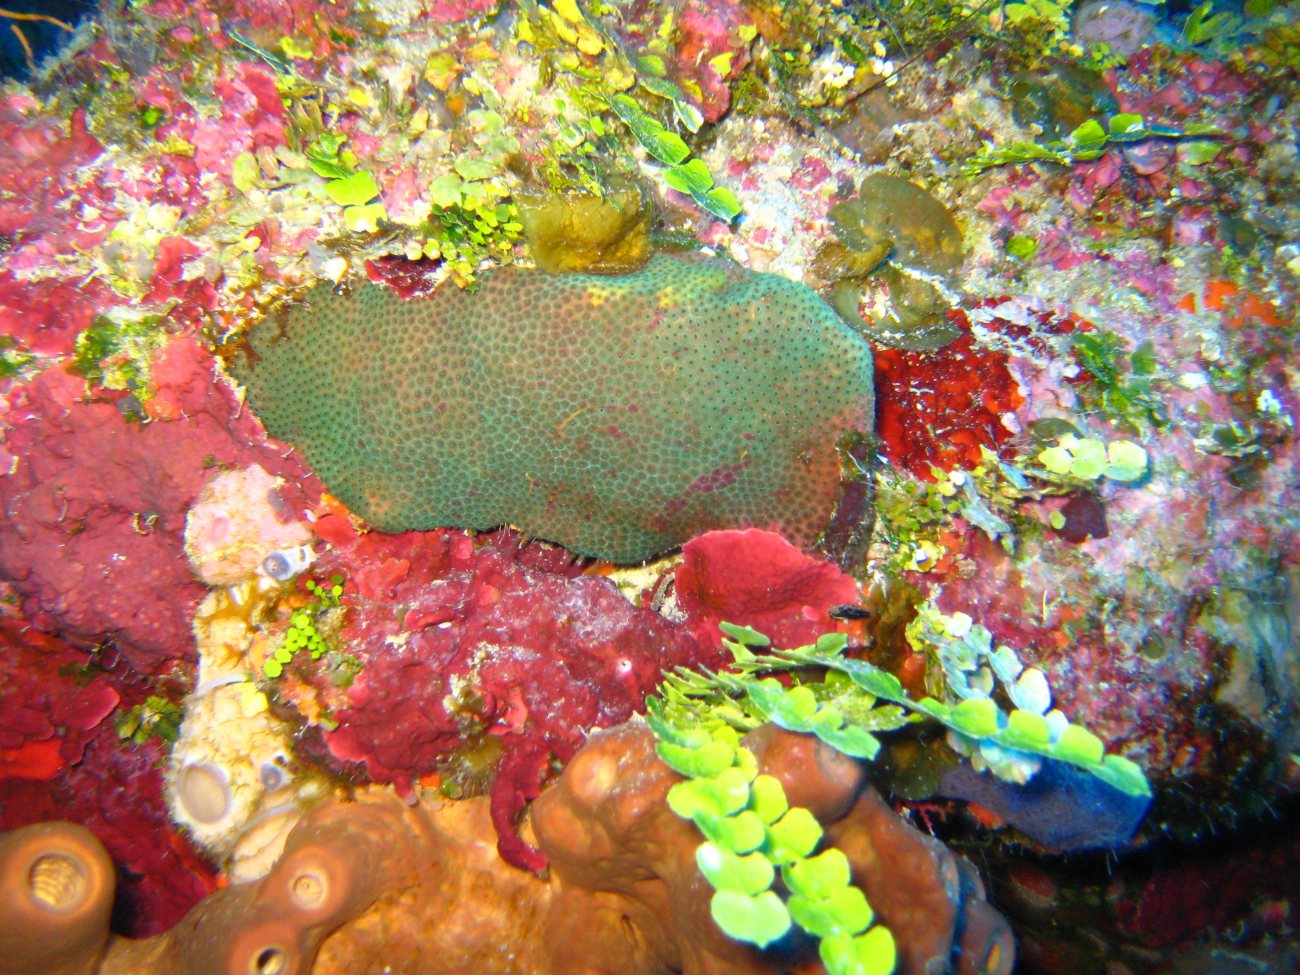 Colorful sponges and algae